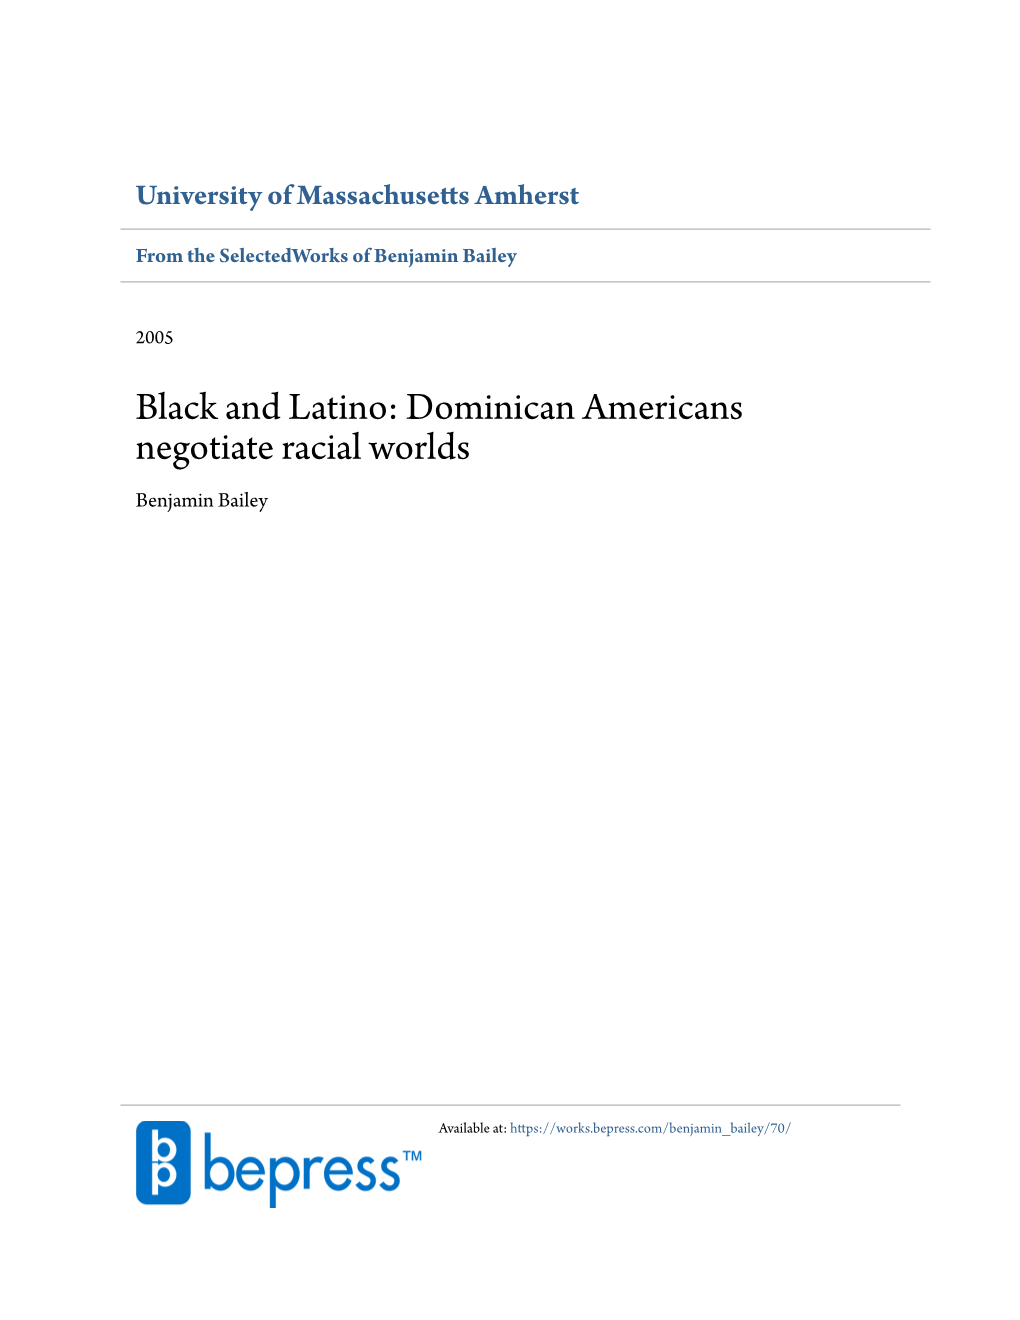 Dominican Americans Negotiate Racial Worlds Benjamin Bailey